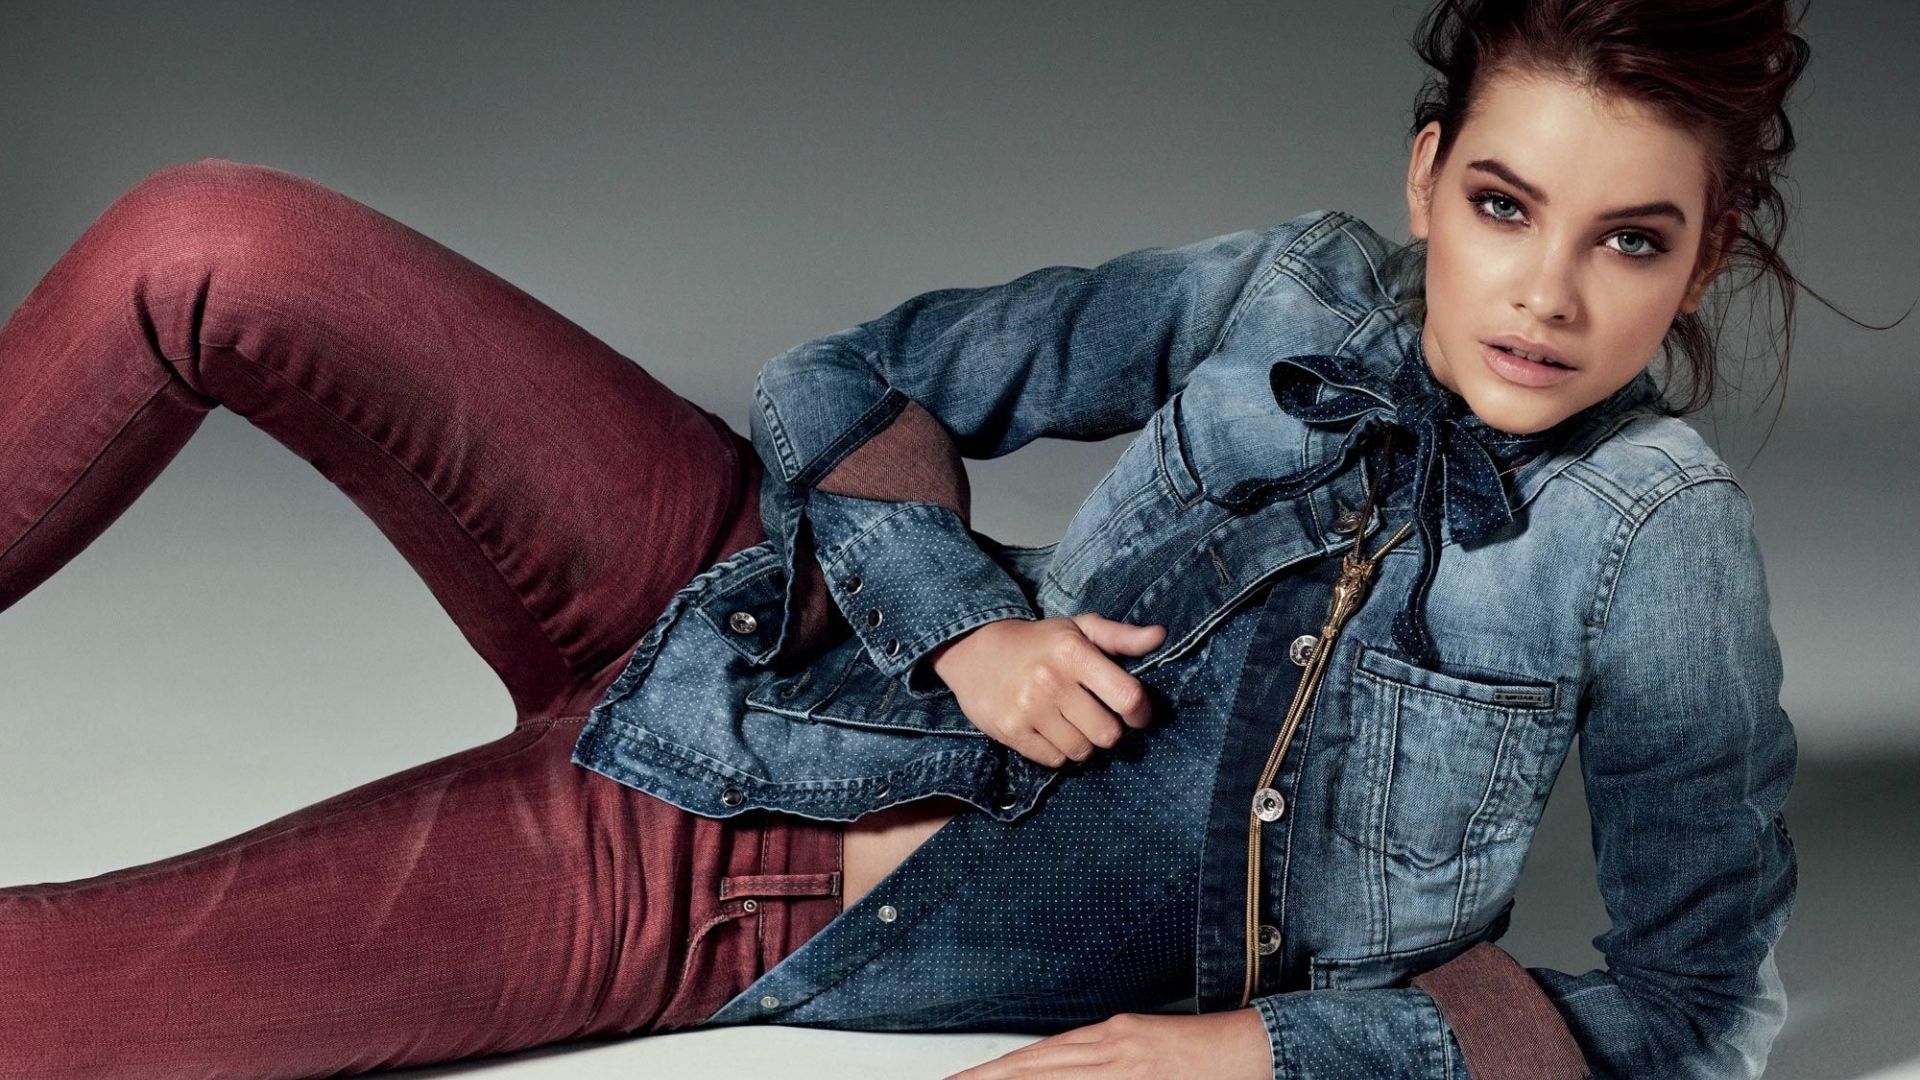 Wallpaper Barbara Palvin, model, celebrity, jeans jacket